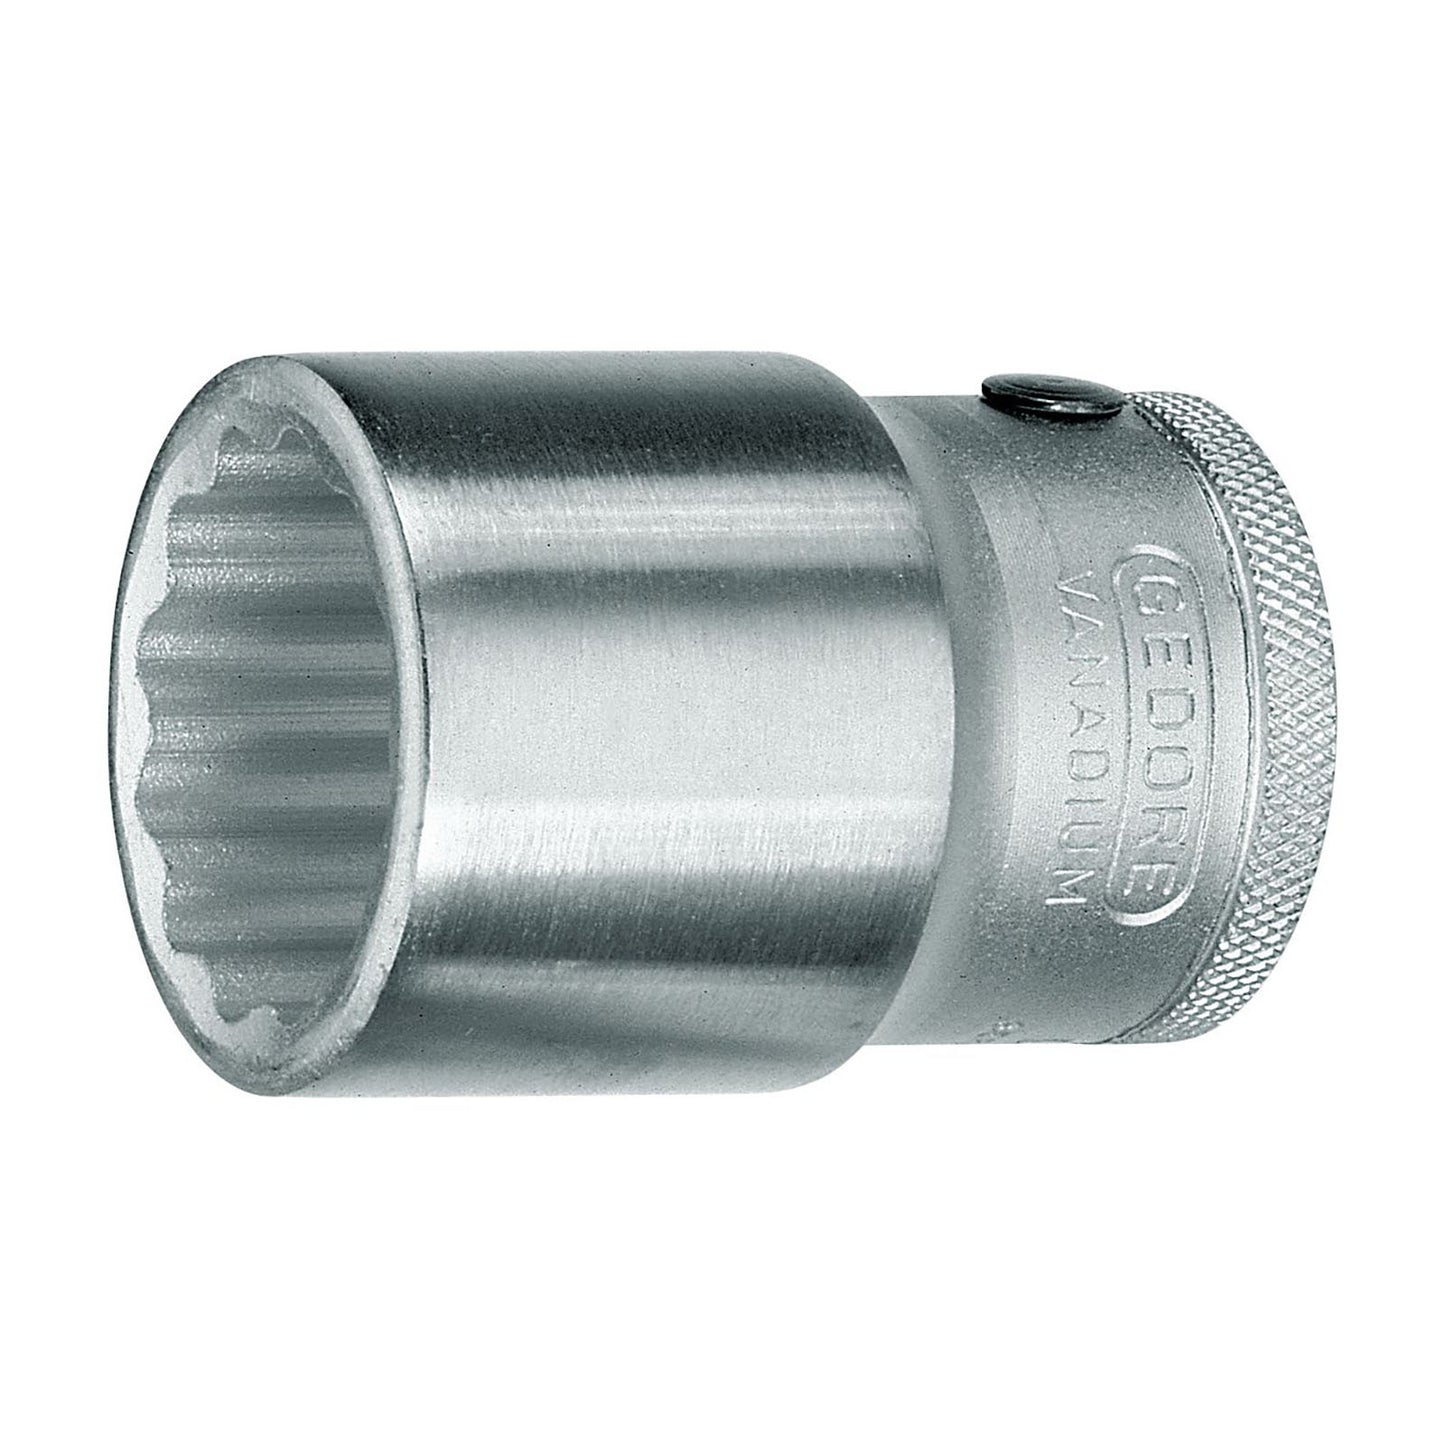 GEDORE D 32 55 - Unit Drive Socket 3/4", 55 mm (6273480)